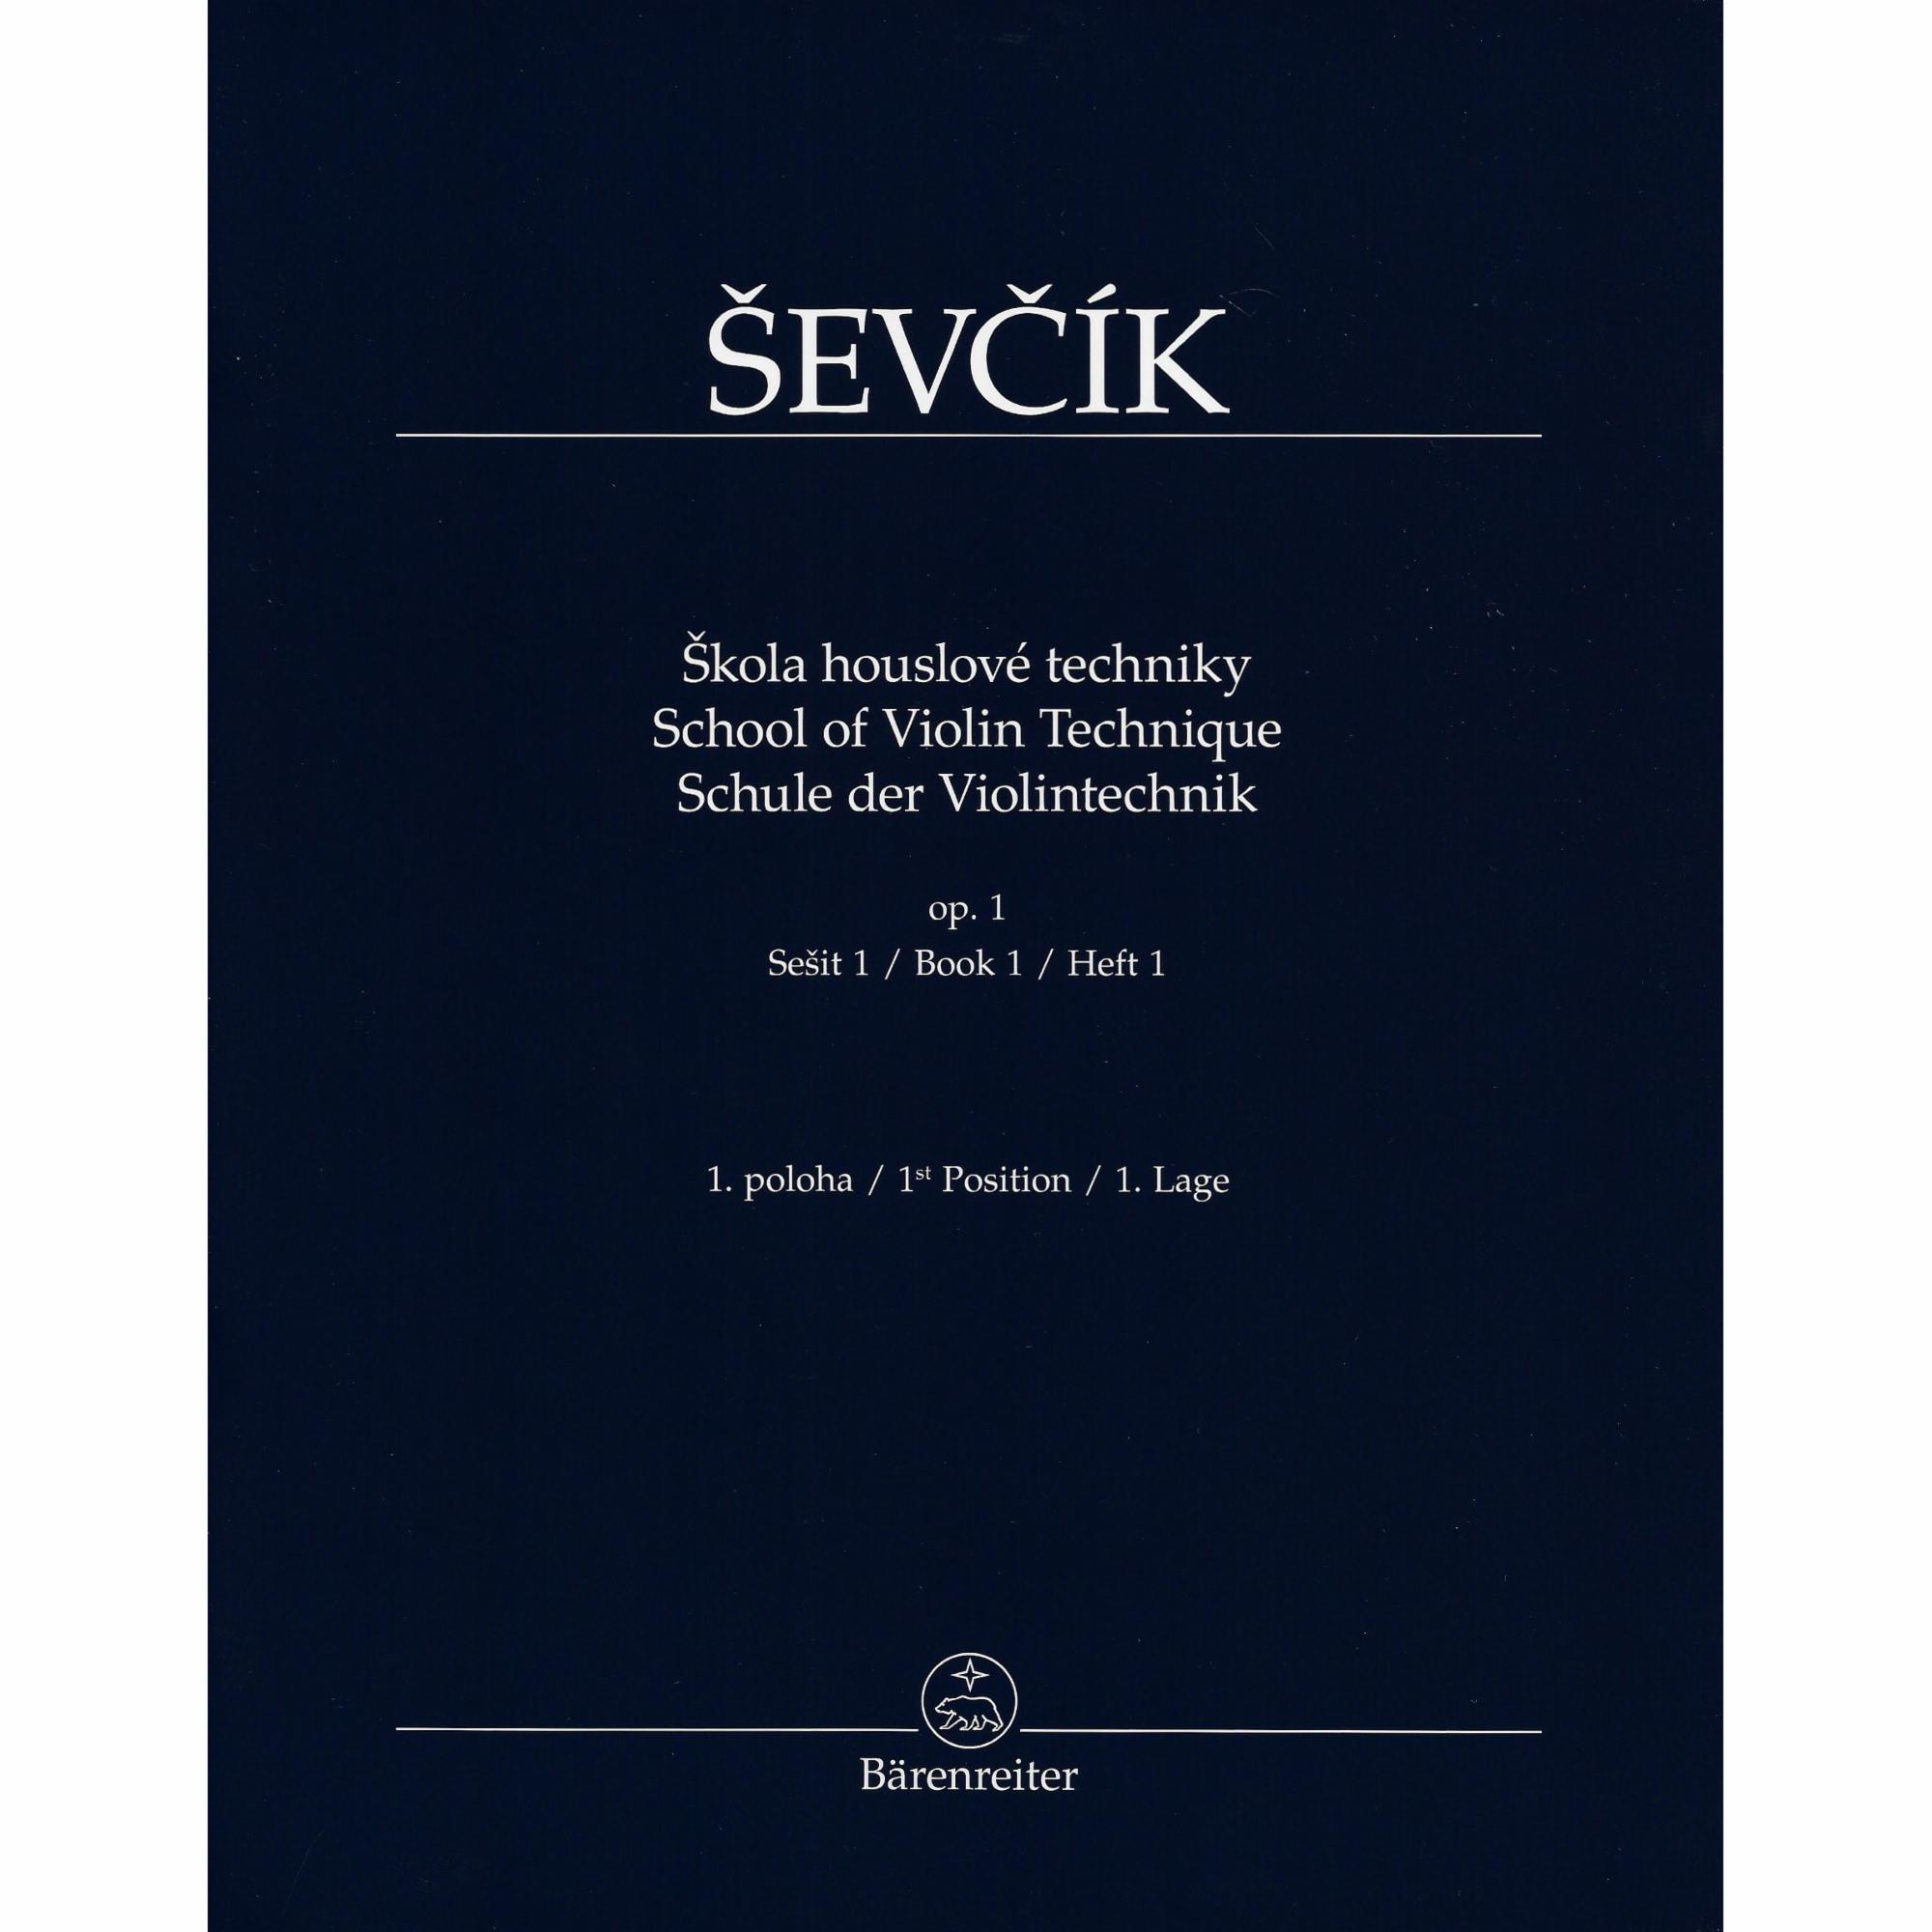 Sevcik -- School of Violin Technique, Op. 1, Books 1-4